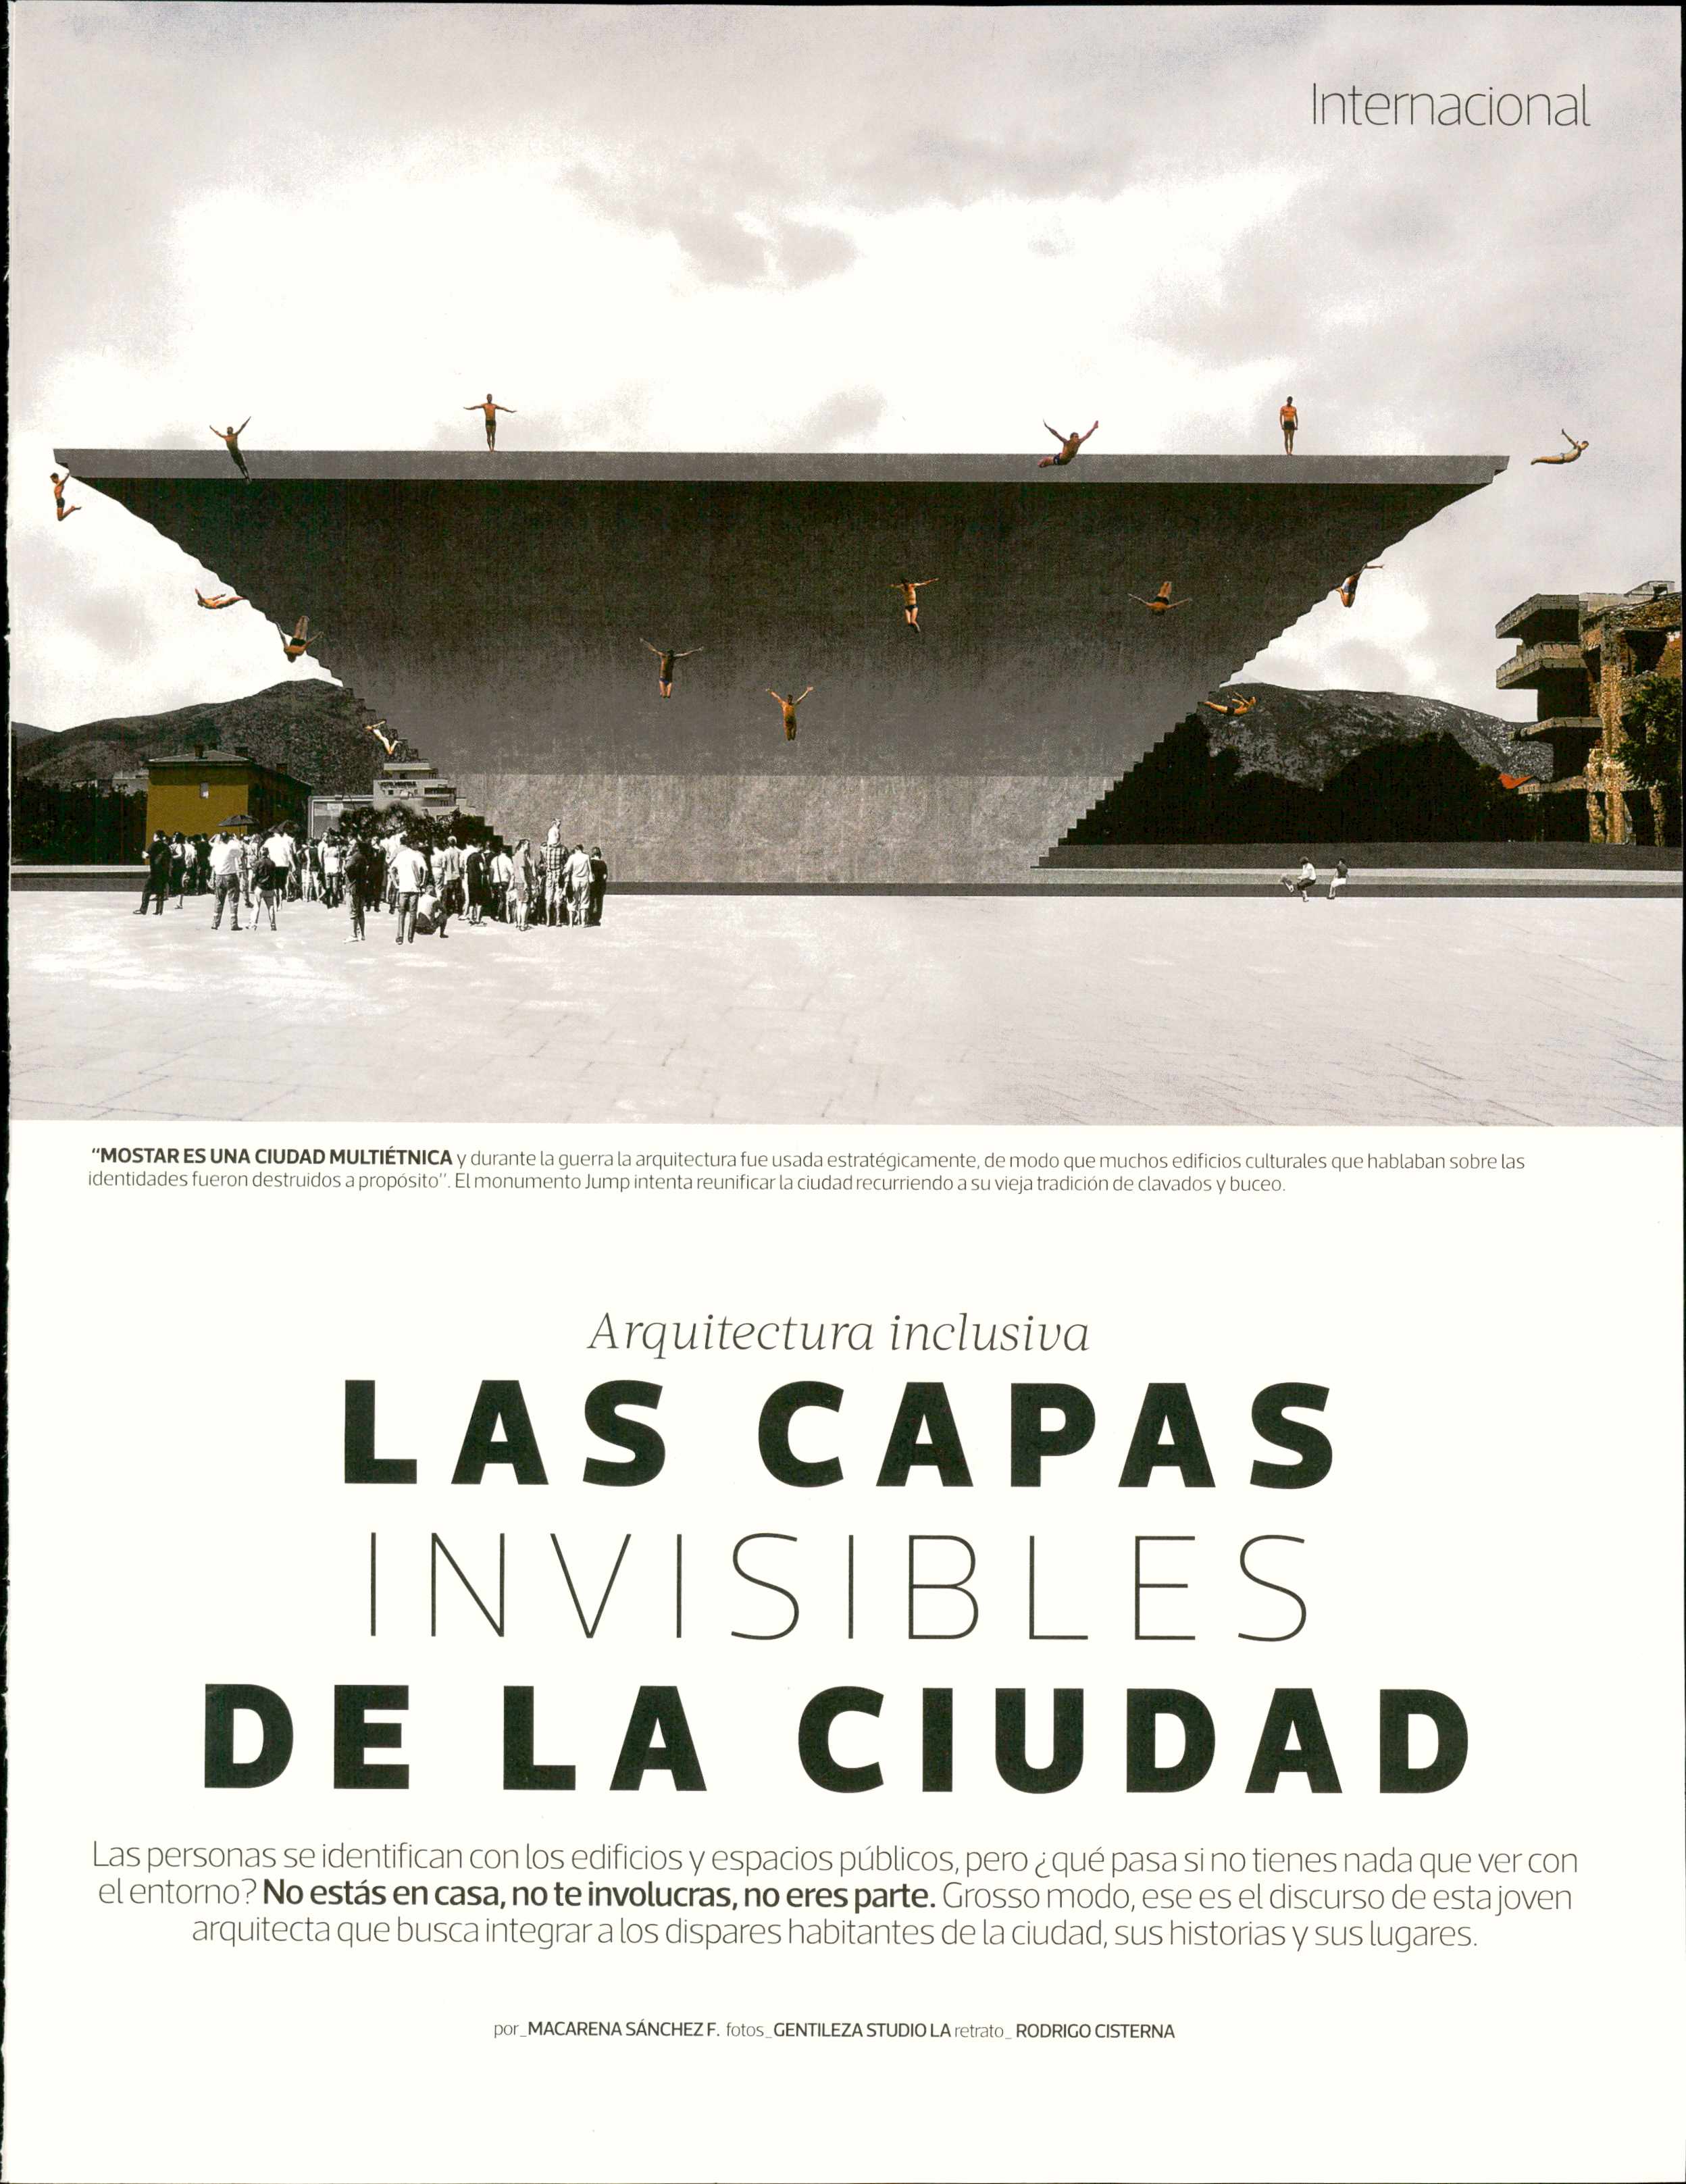 02C226E719-05-11_Arna_Mackic-_Las_capas_invisibles_de_la_ciudad_Revista_MasDeco.jpeg